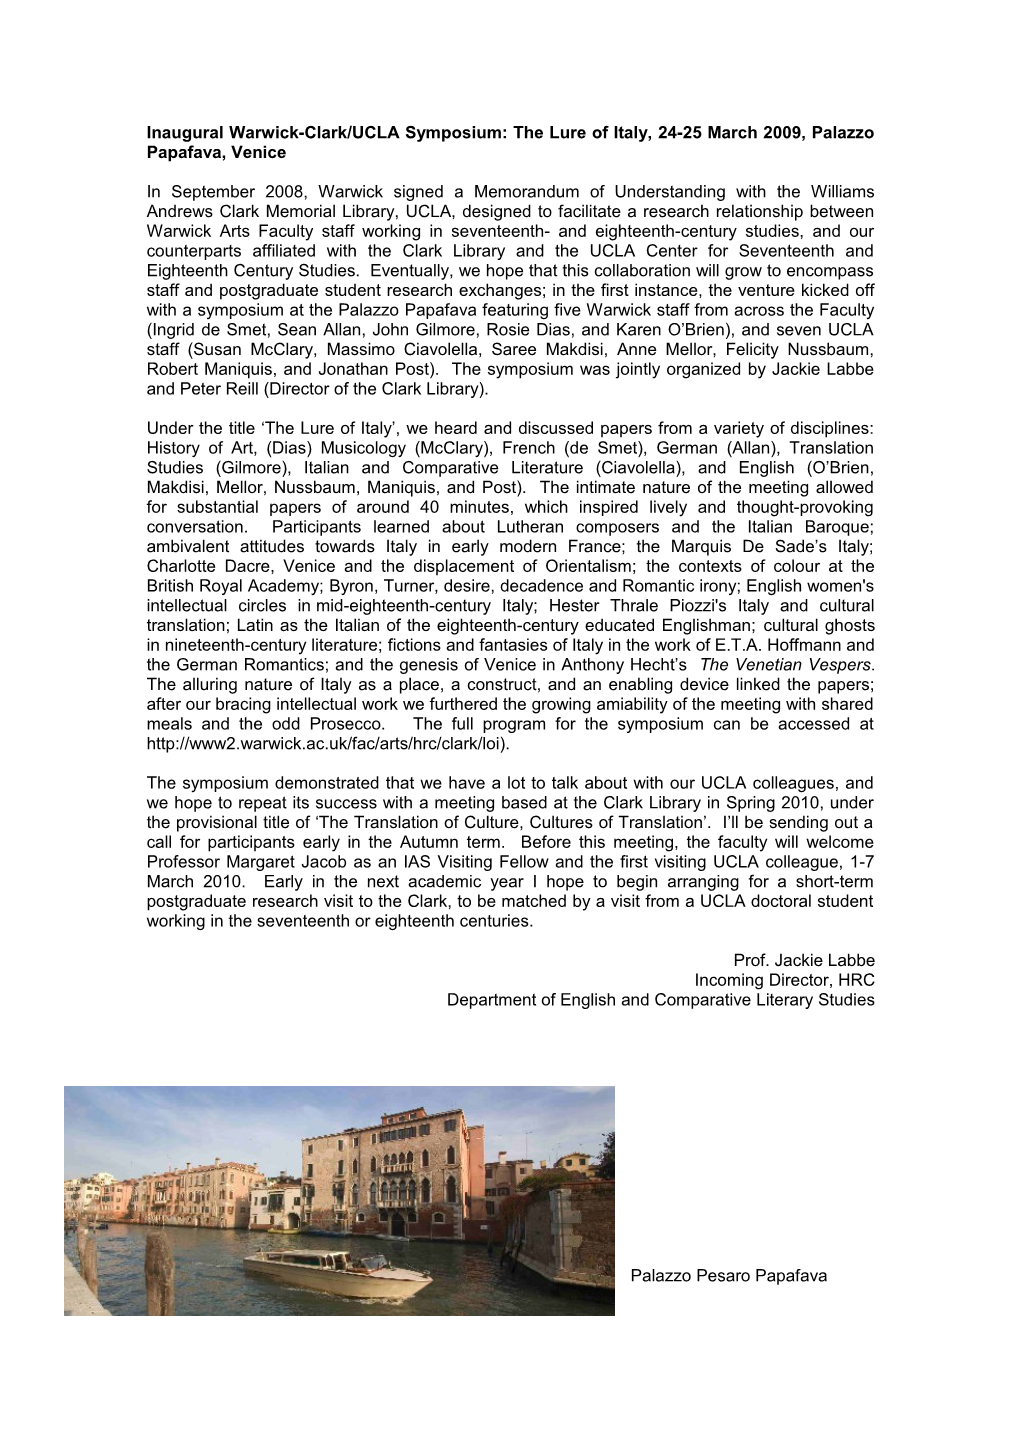 Inaugural Warwick-Clark/UCLA Symposium: the Lure of Italy, 24-25 March 2009, Palazzo Papafava